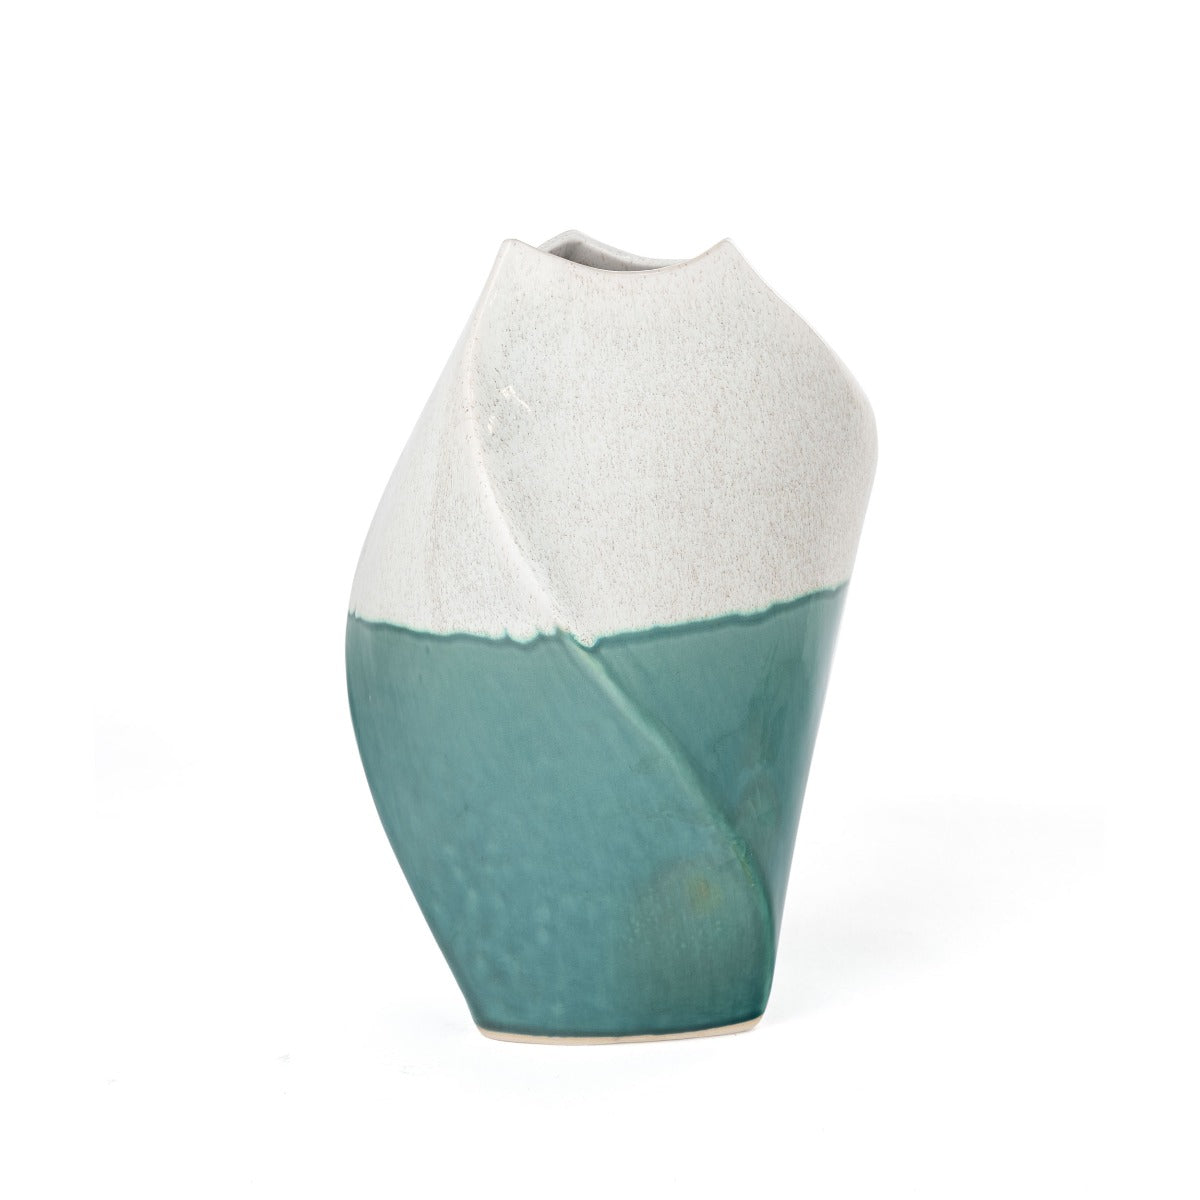 Contemporary ceramic table vase